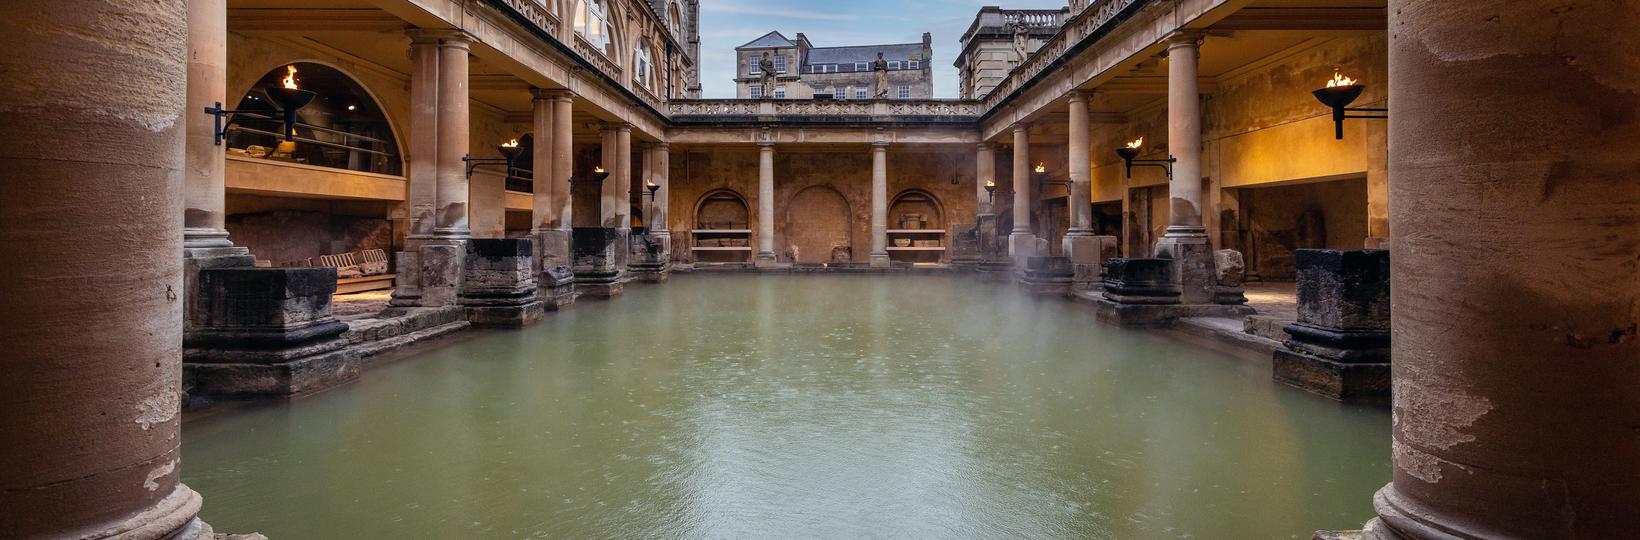 Image: The Great Bath